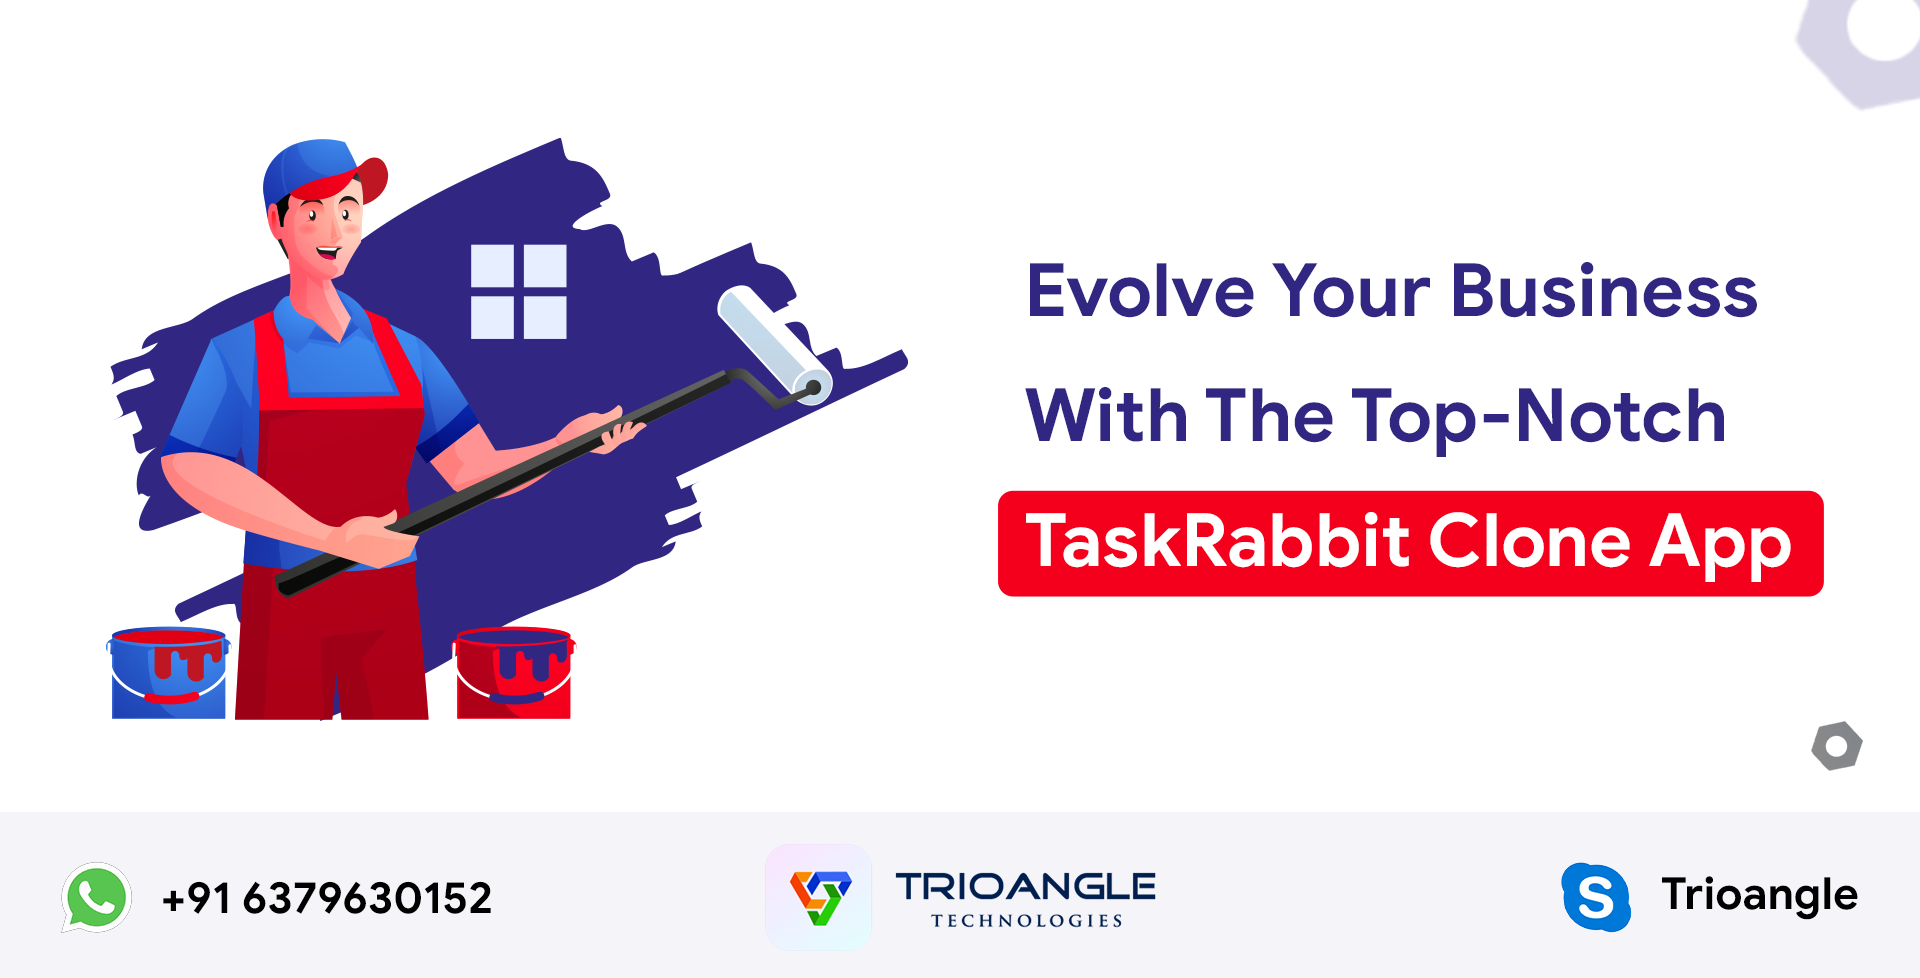 TaskRabbit Clone